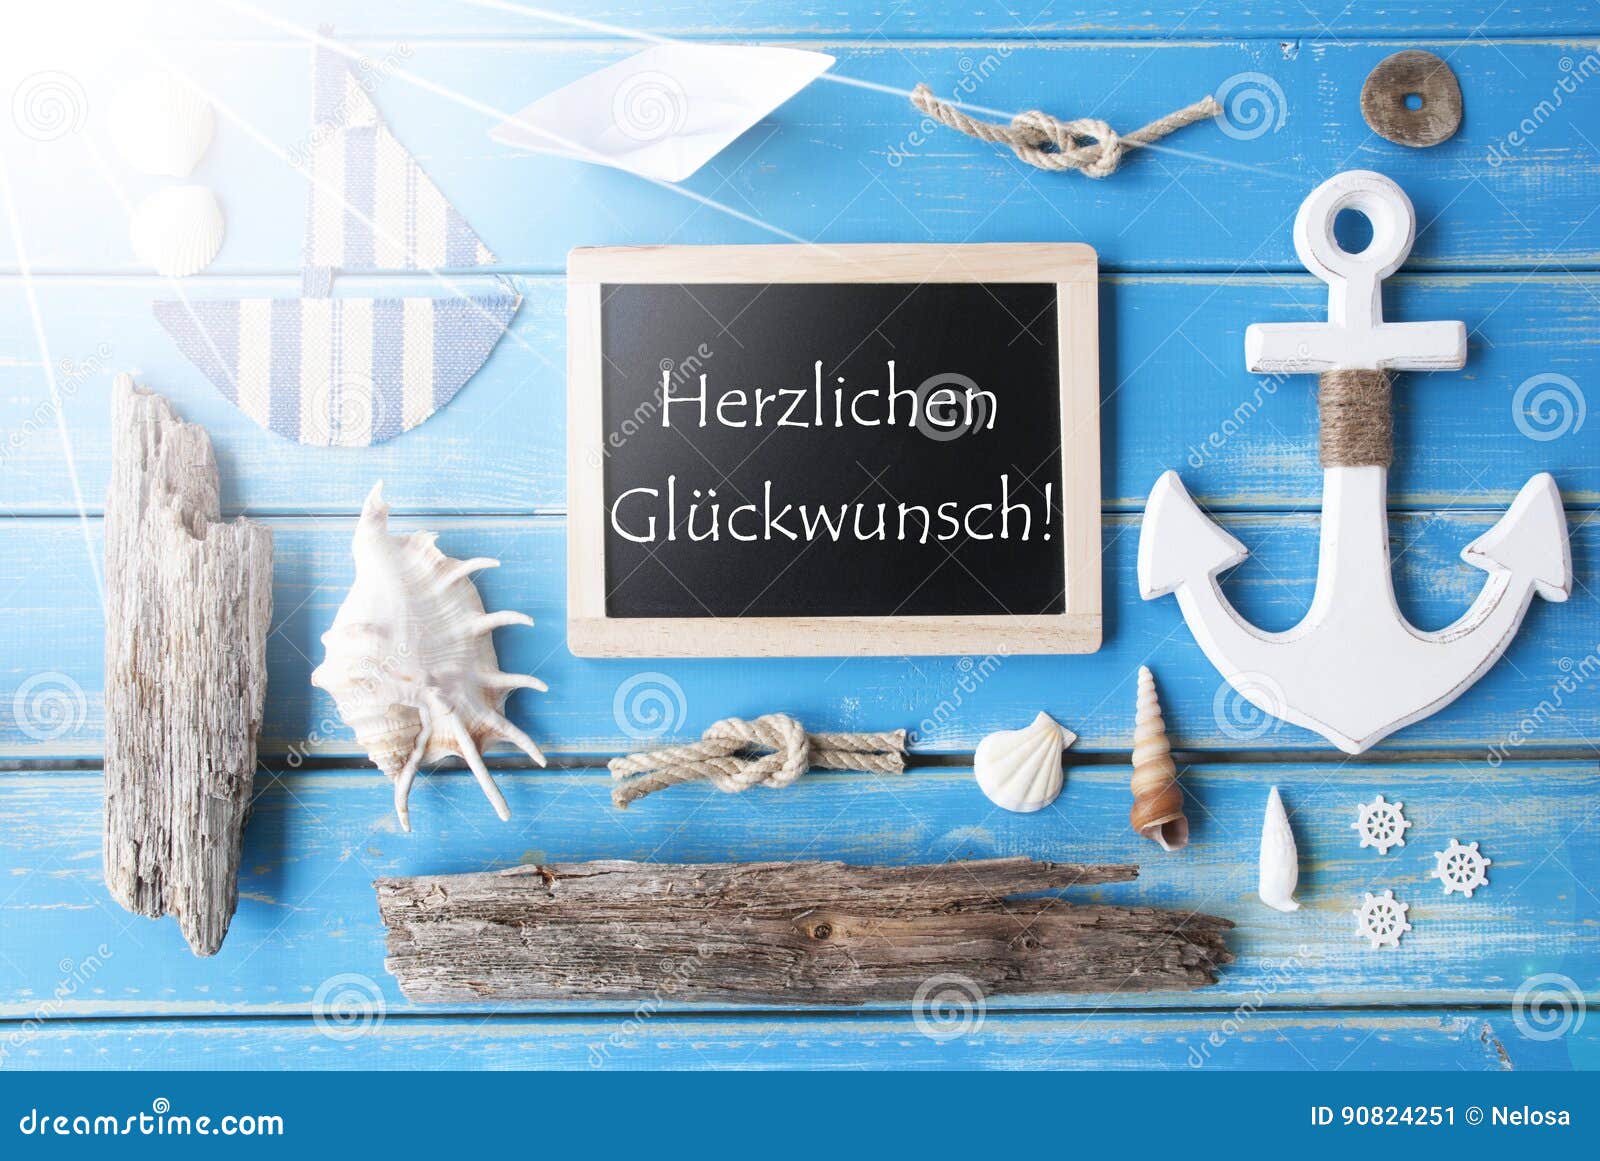 sunny nautic chalkboard, glueckwunsch means congratulations